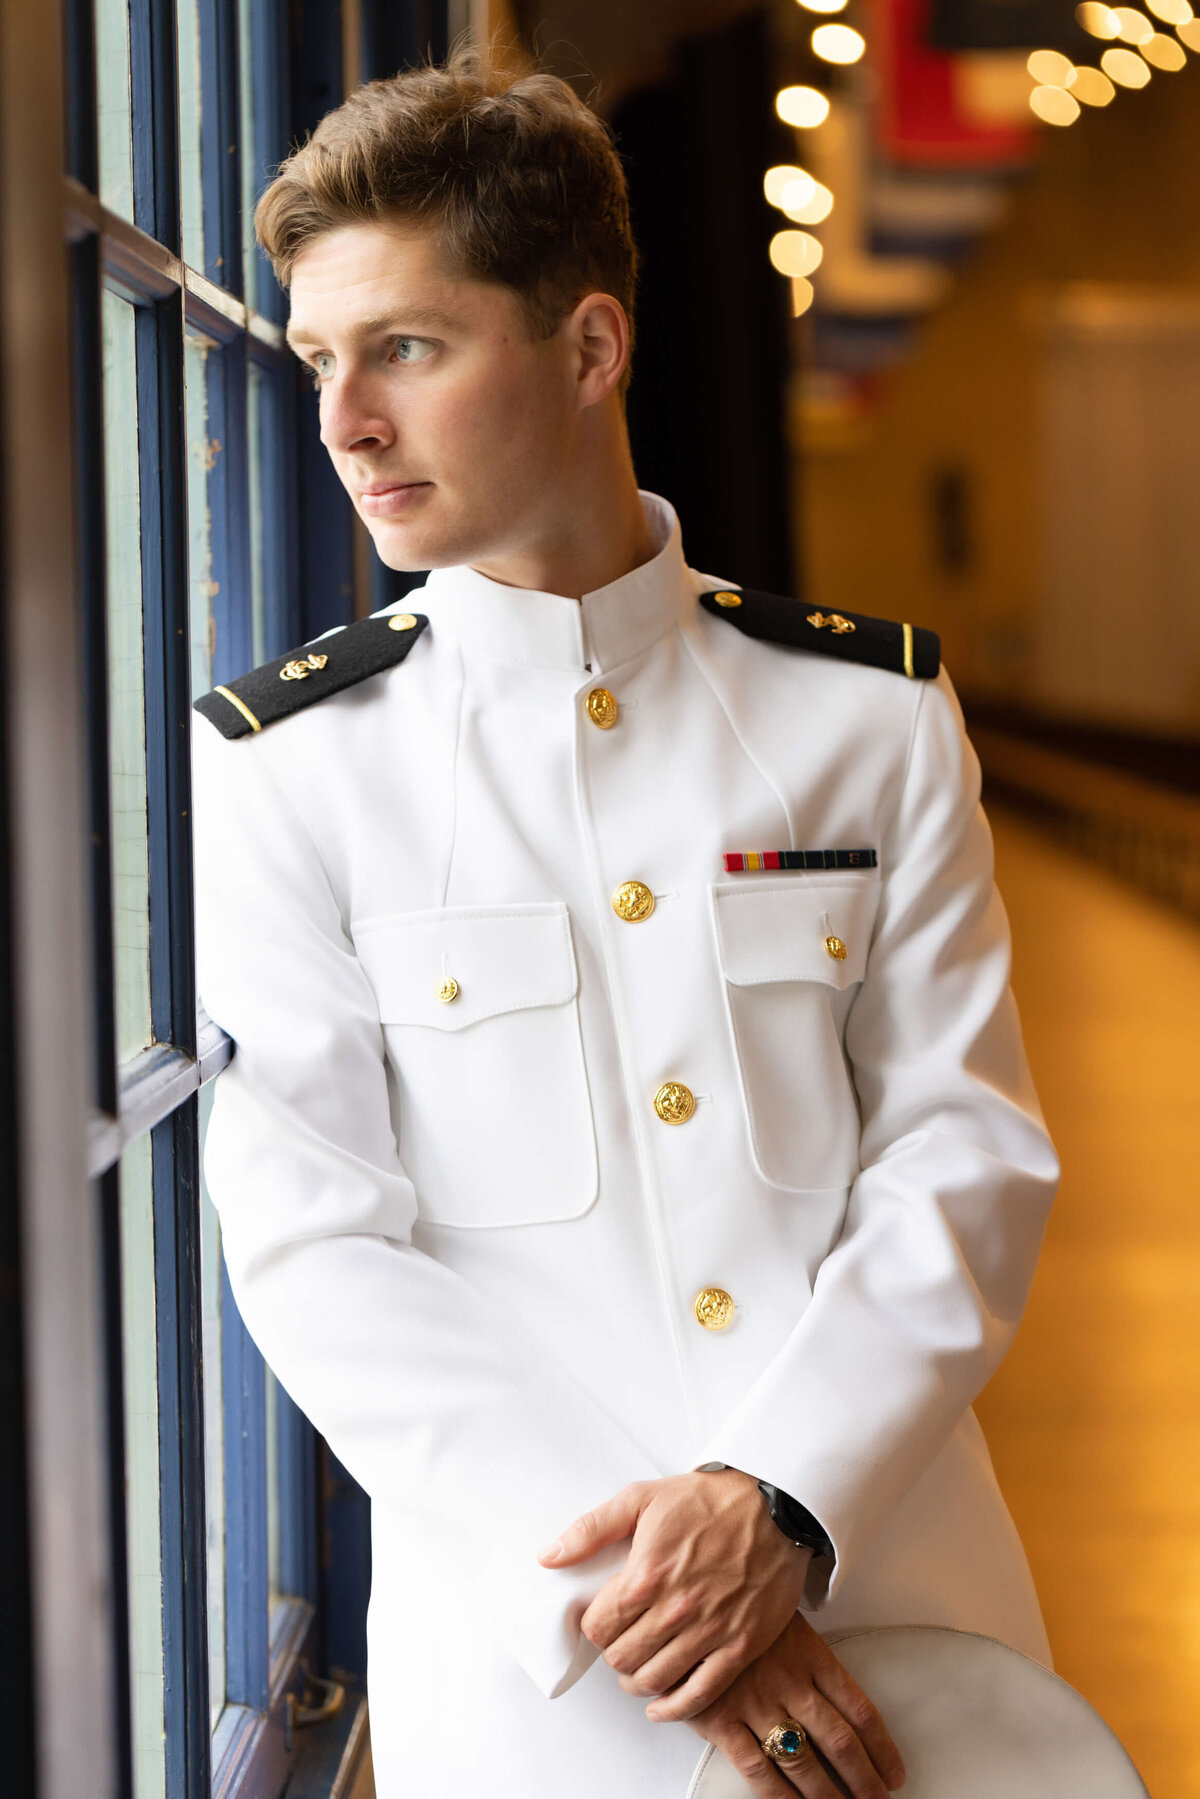 USNA Midshipman senior portrait in Dahlgren Hall at Naval Academy in Annapolis, Maryland.